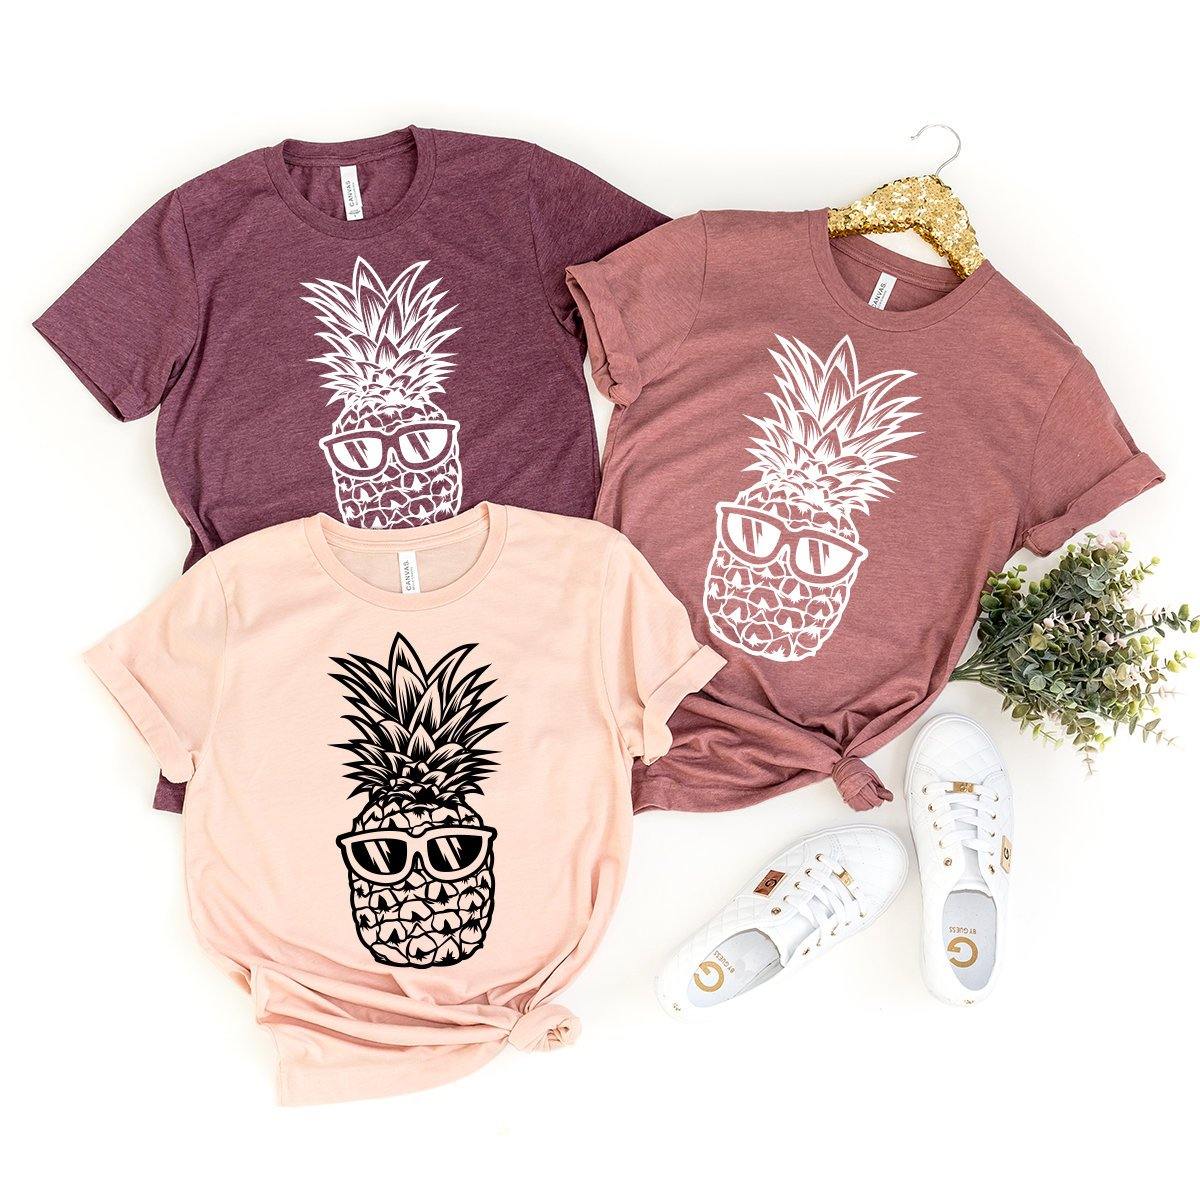 Cool Pineapple Shirt, Funny Beach Shirt, Funny Summer Shirt, Funny Pineapple Shirt, Pineapple T-shirt, Funny Tropical Shirt, Pineapple Tee - Fastdeliverytees.com